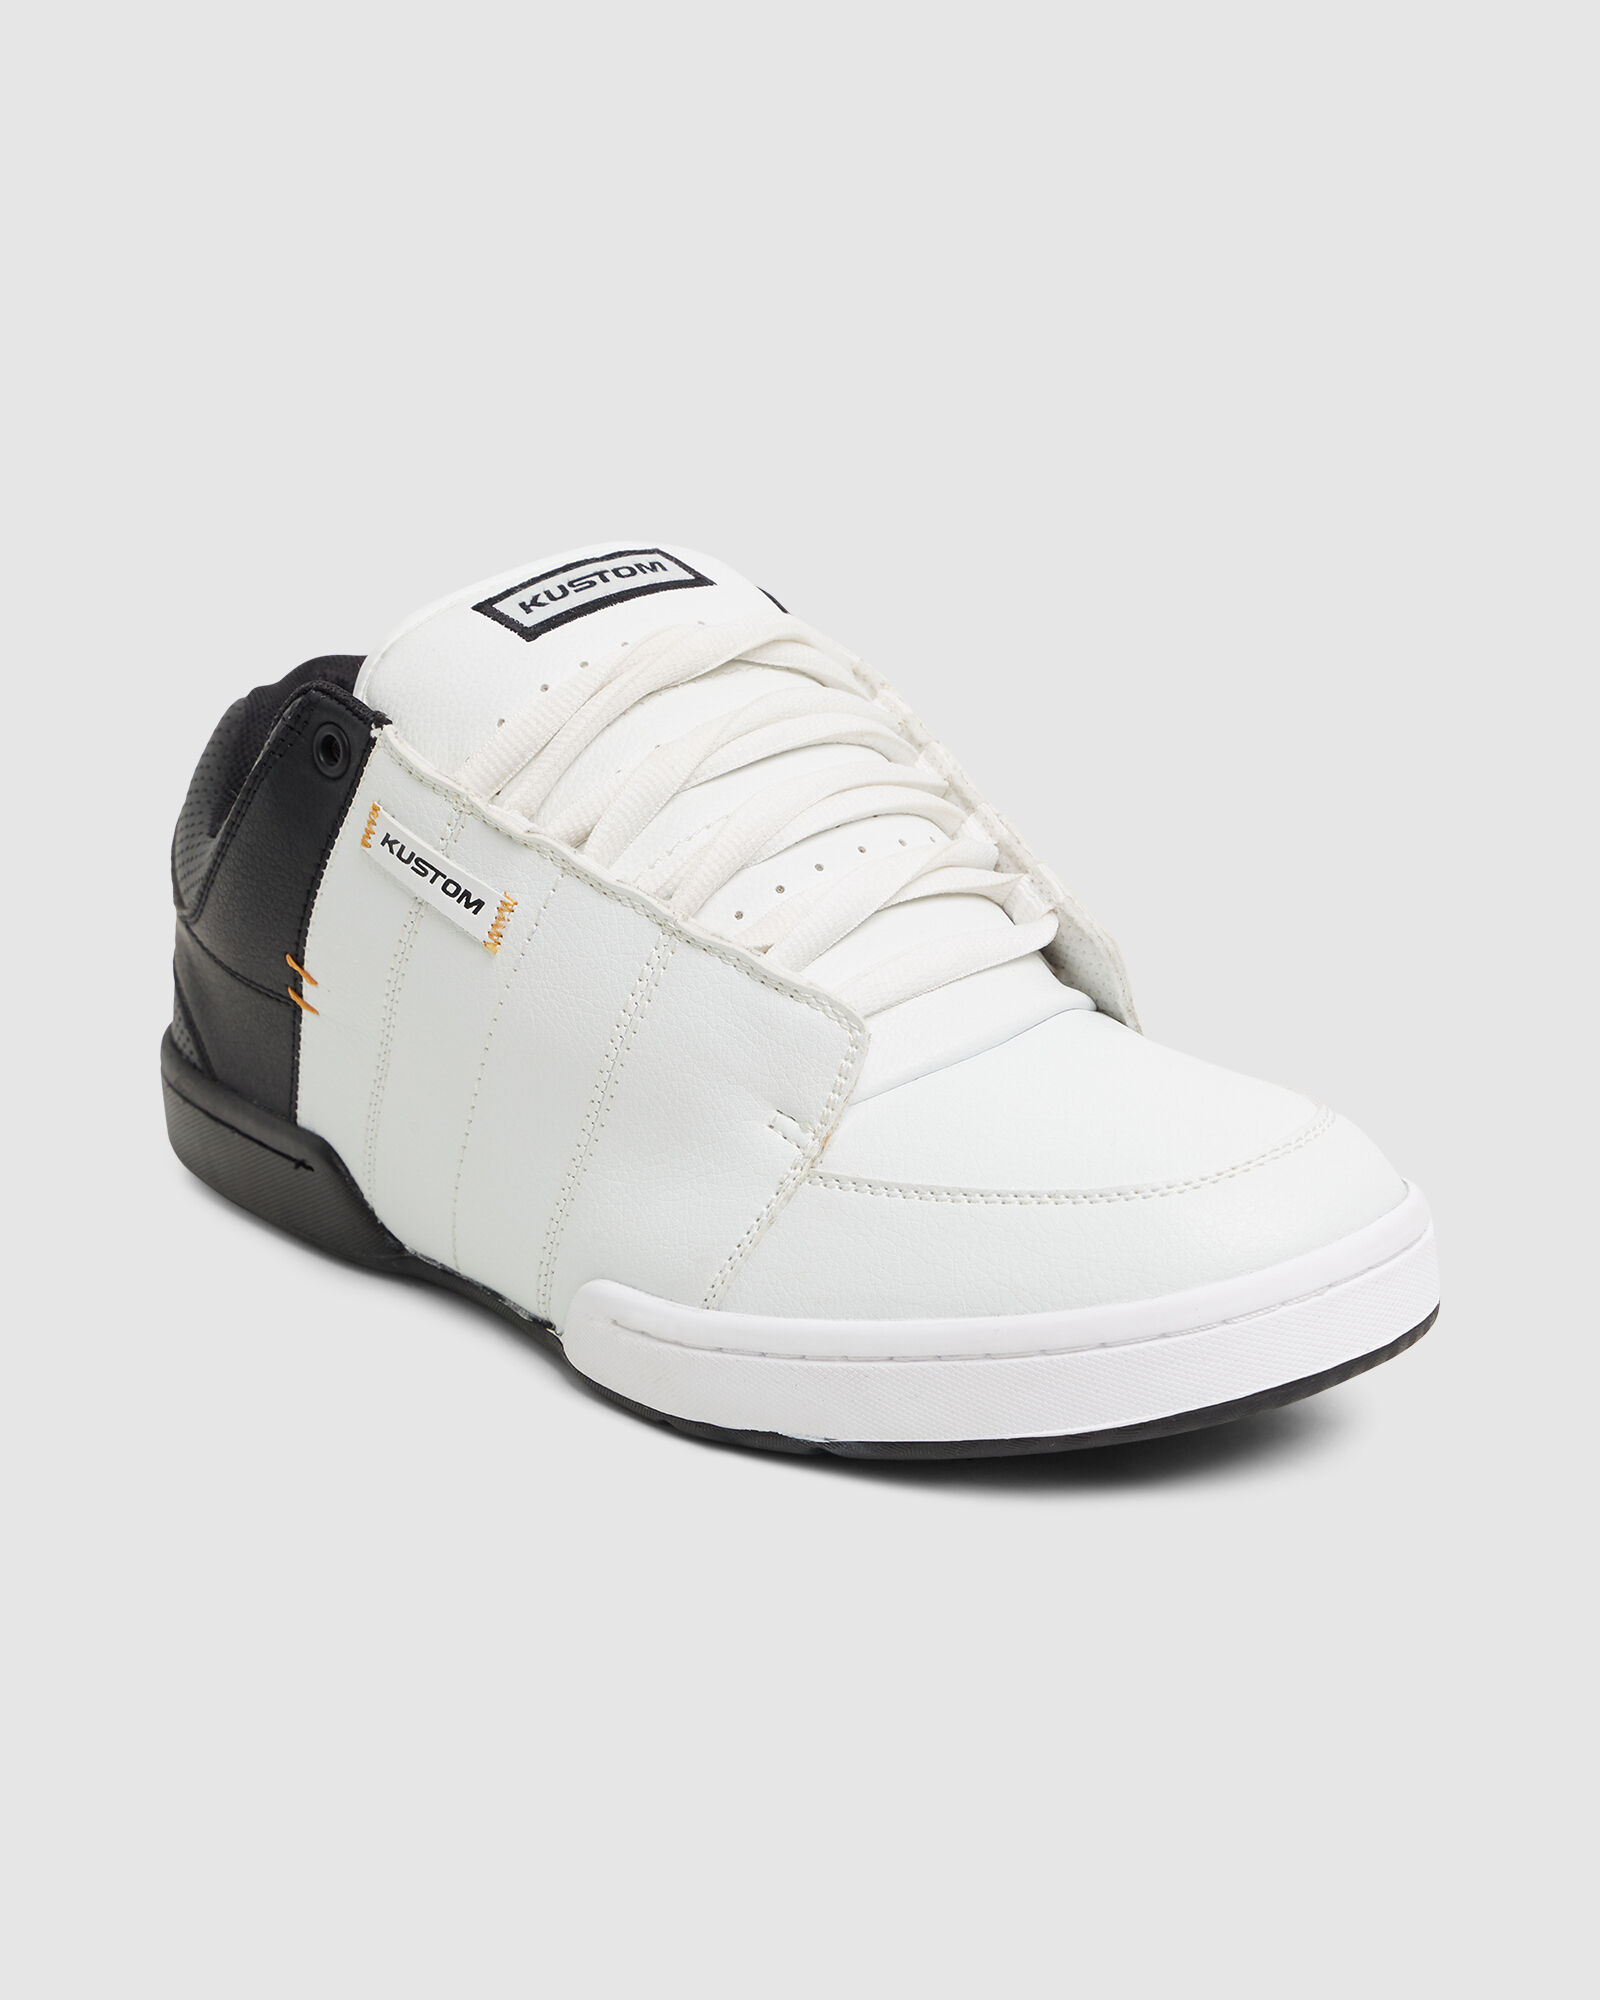 Mens Kustom Kramer Black Leather School Shoes, Size 8 - 14. NIB, RRP  $89.99. | eBay